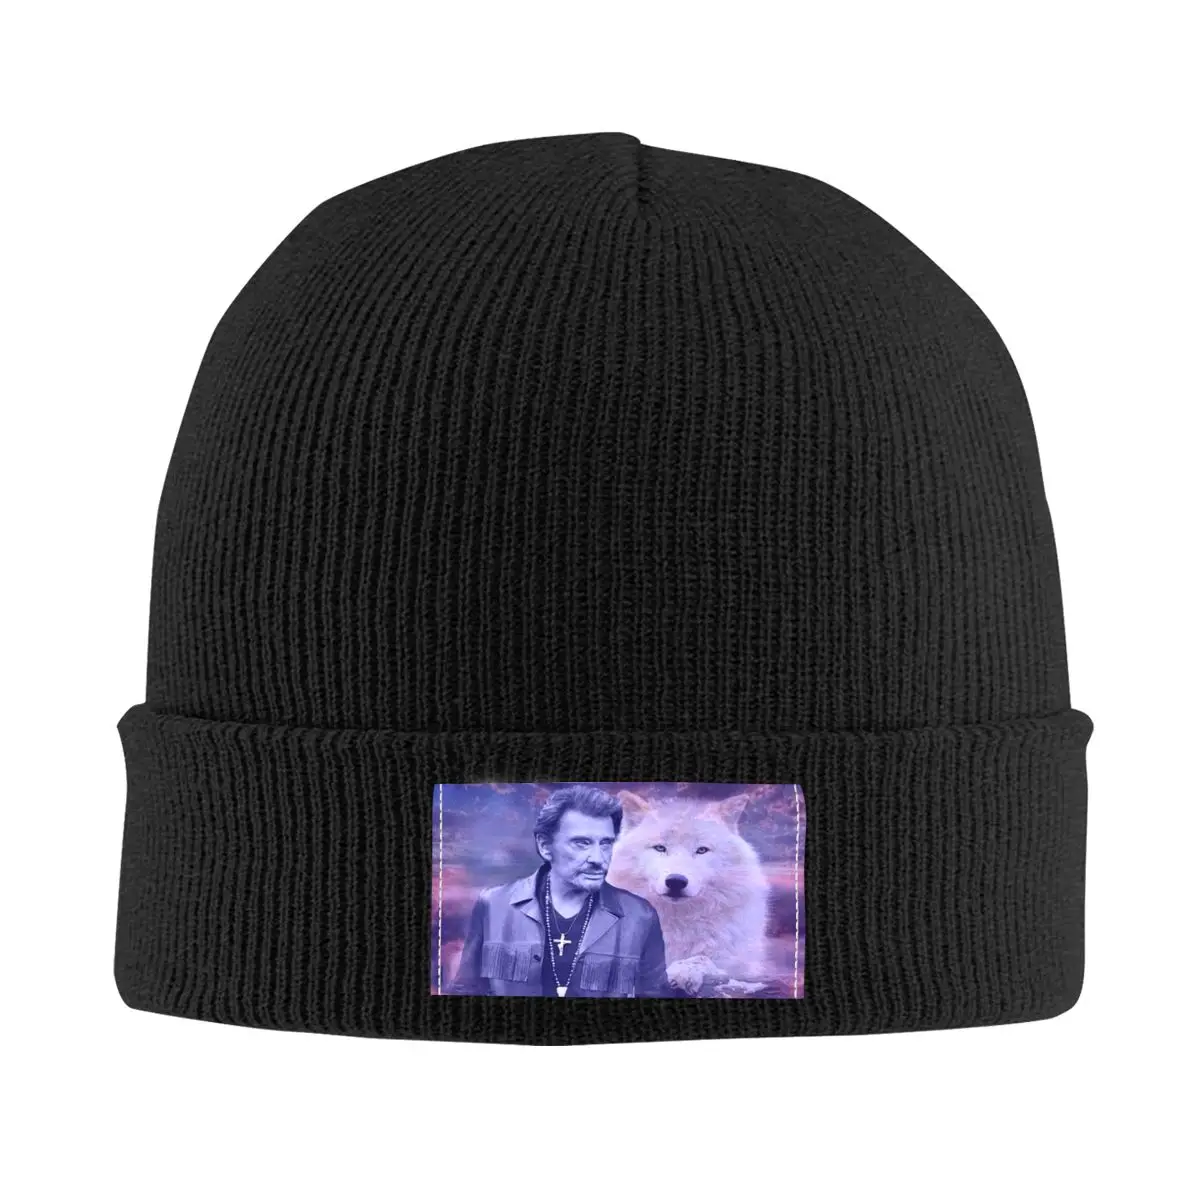 Johnny Hallyday Skullies Beanies Caps Unisex Winter Warm Knit Hat Hip Hop French Singer Rock Music Bonnet Hats Outdoor Ski Cap 1